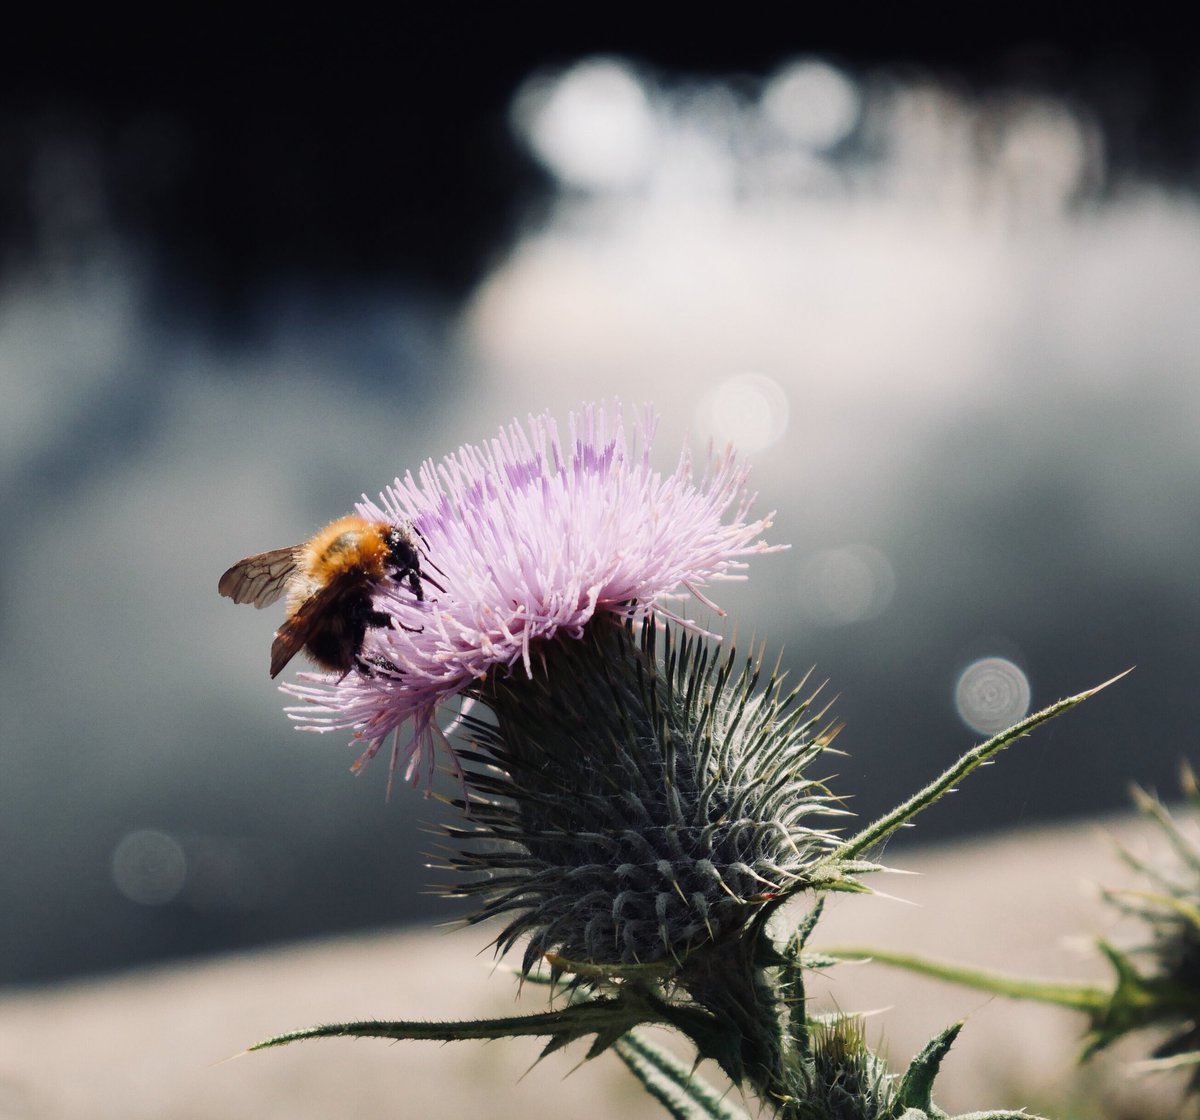 Bee on thistle in evening sunshine
#Ouseburn #NewcasteUponTyne